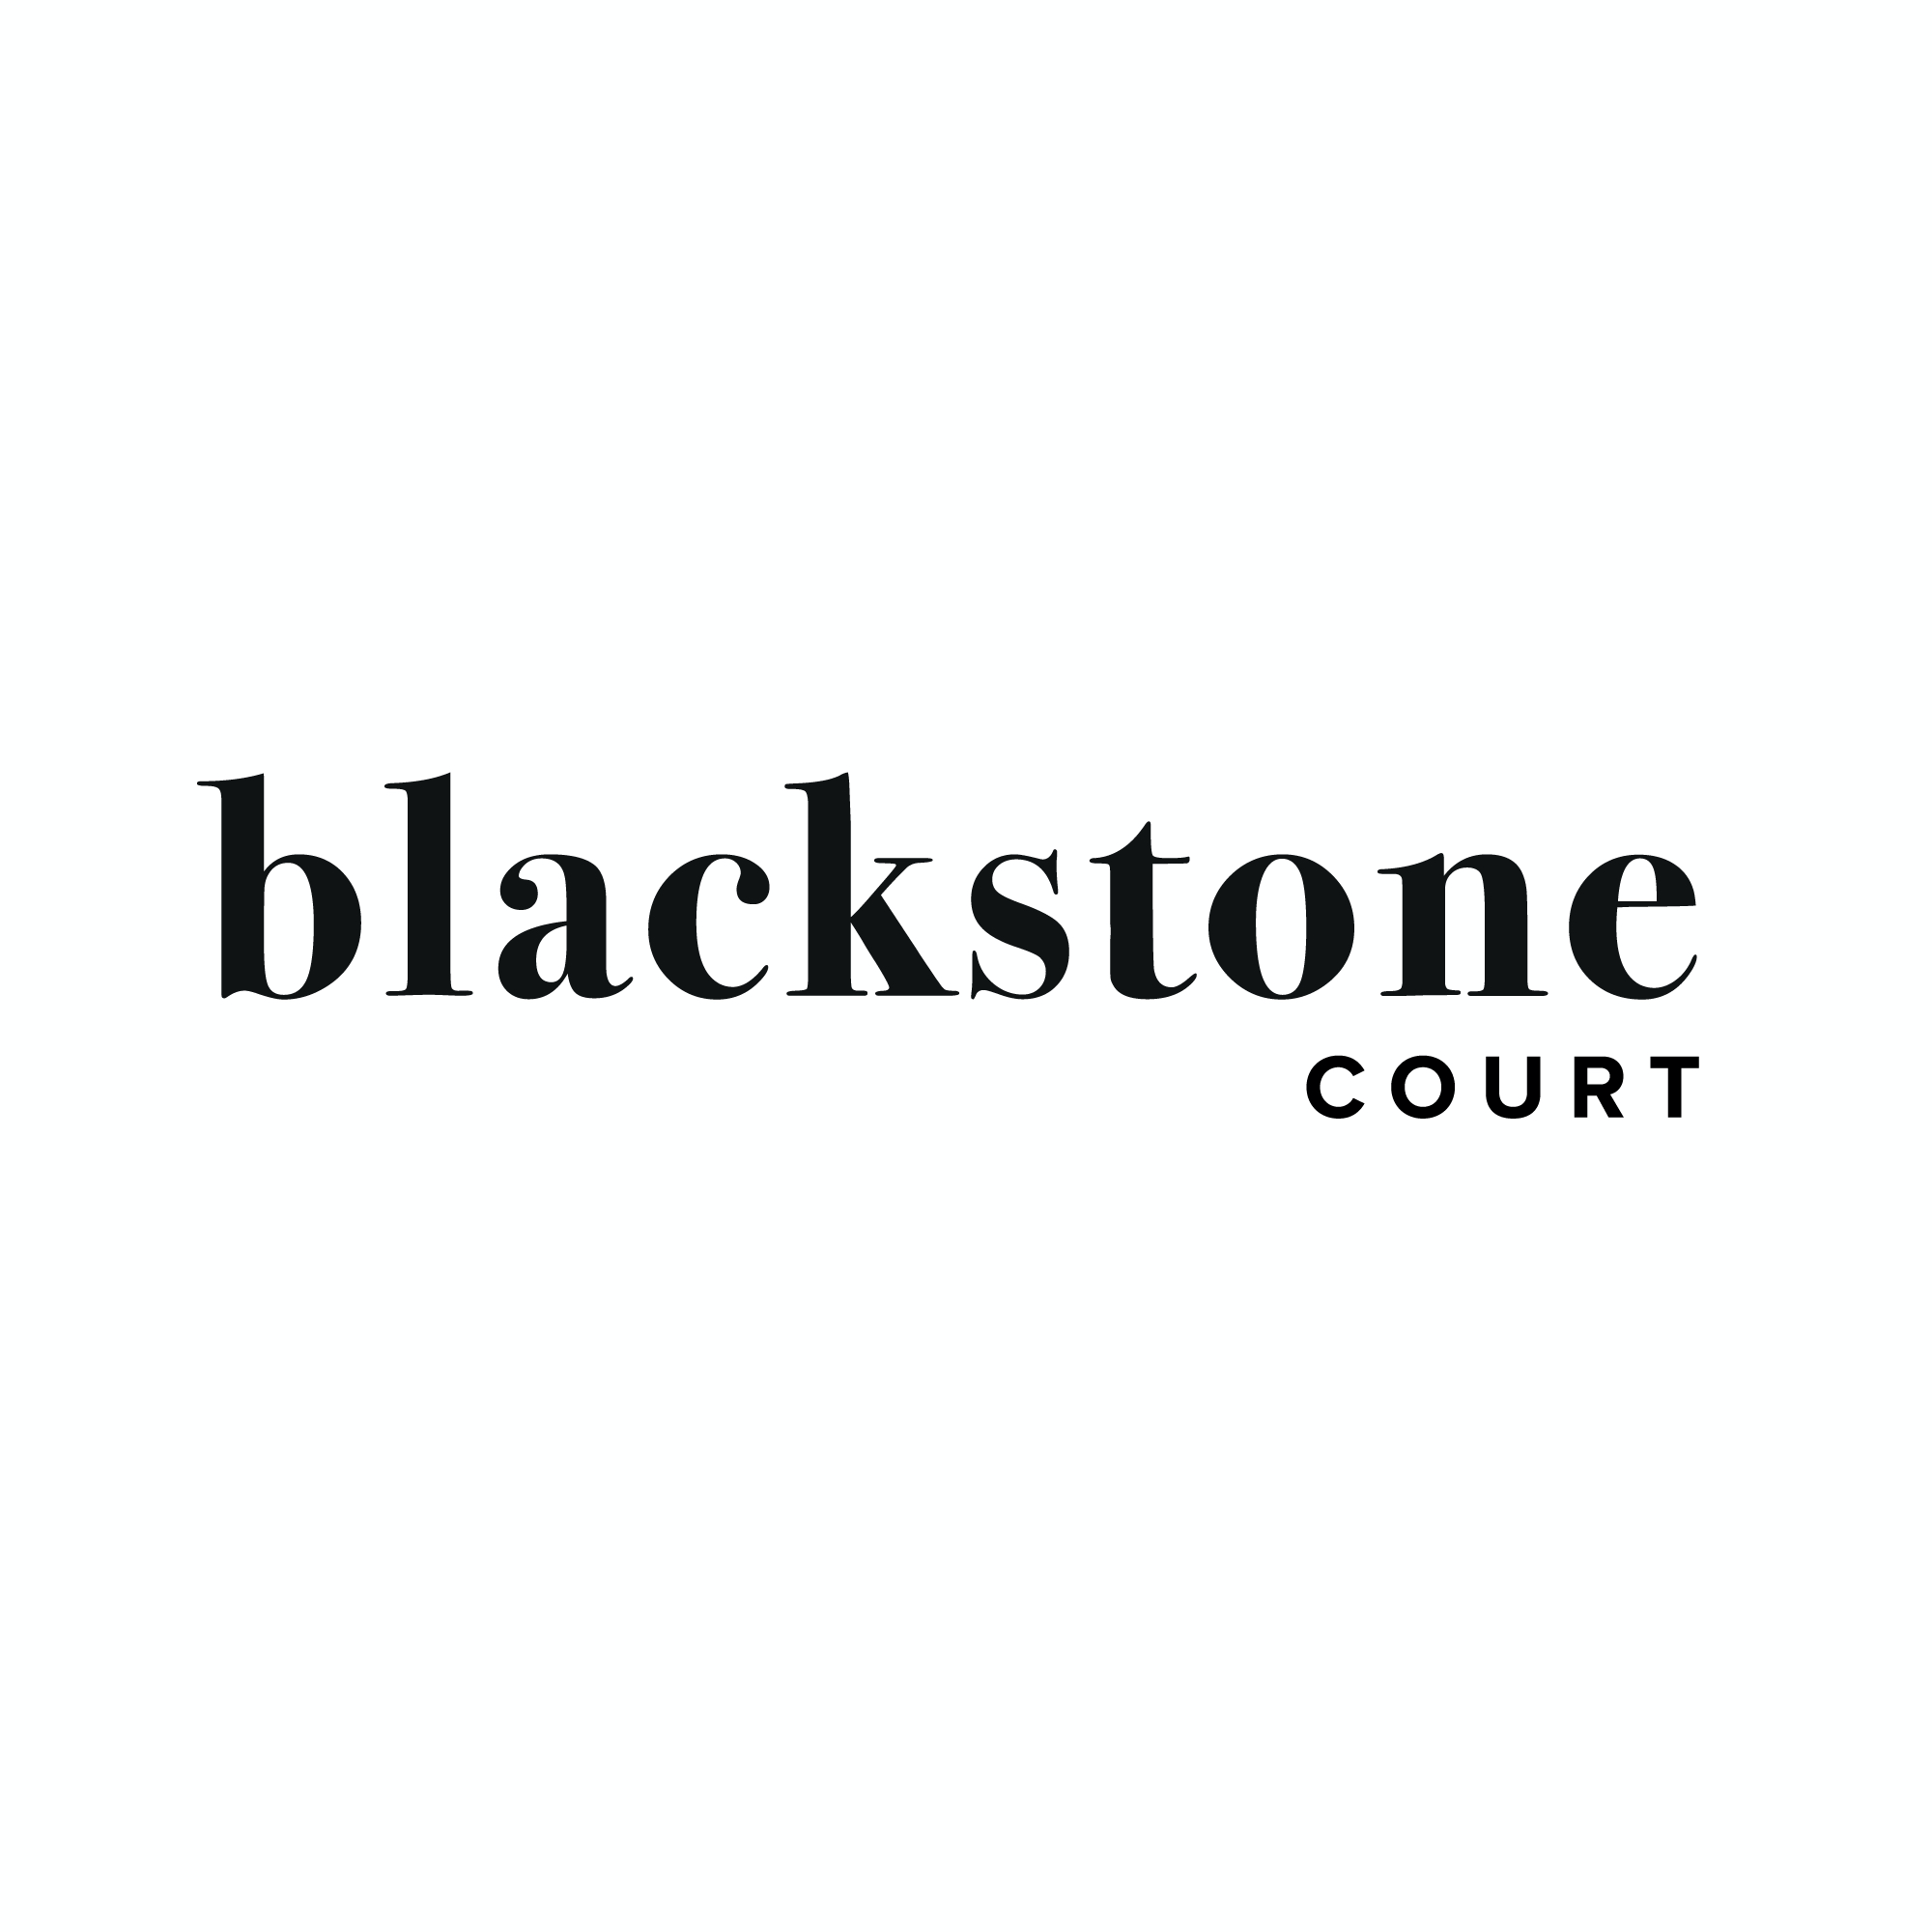 Blackstone Court Logo and Brand Kit